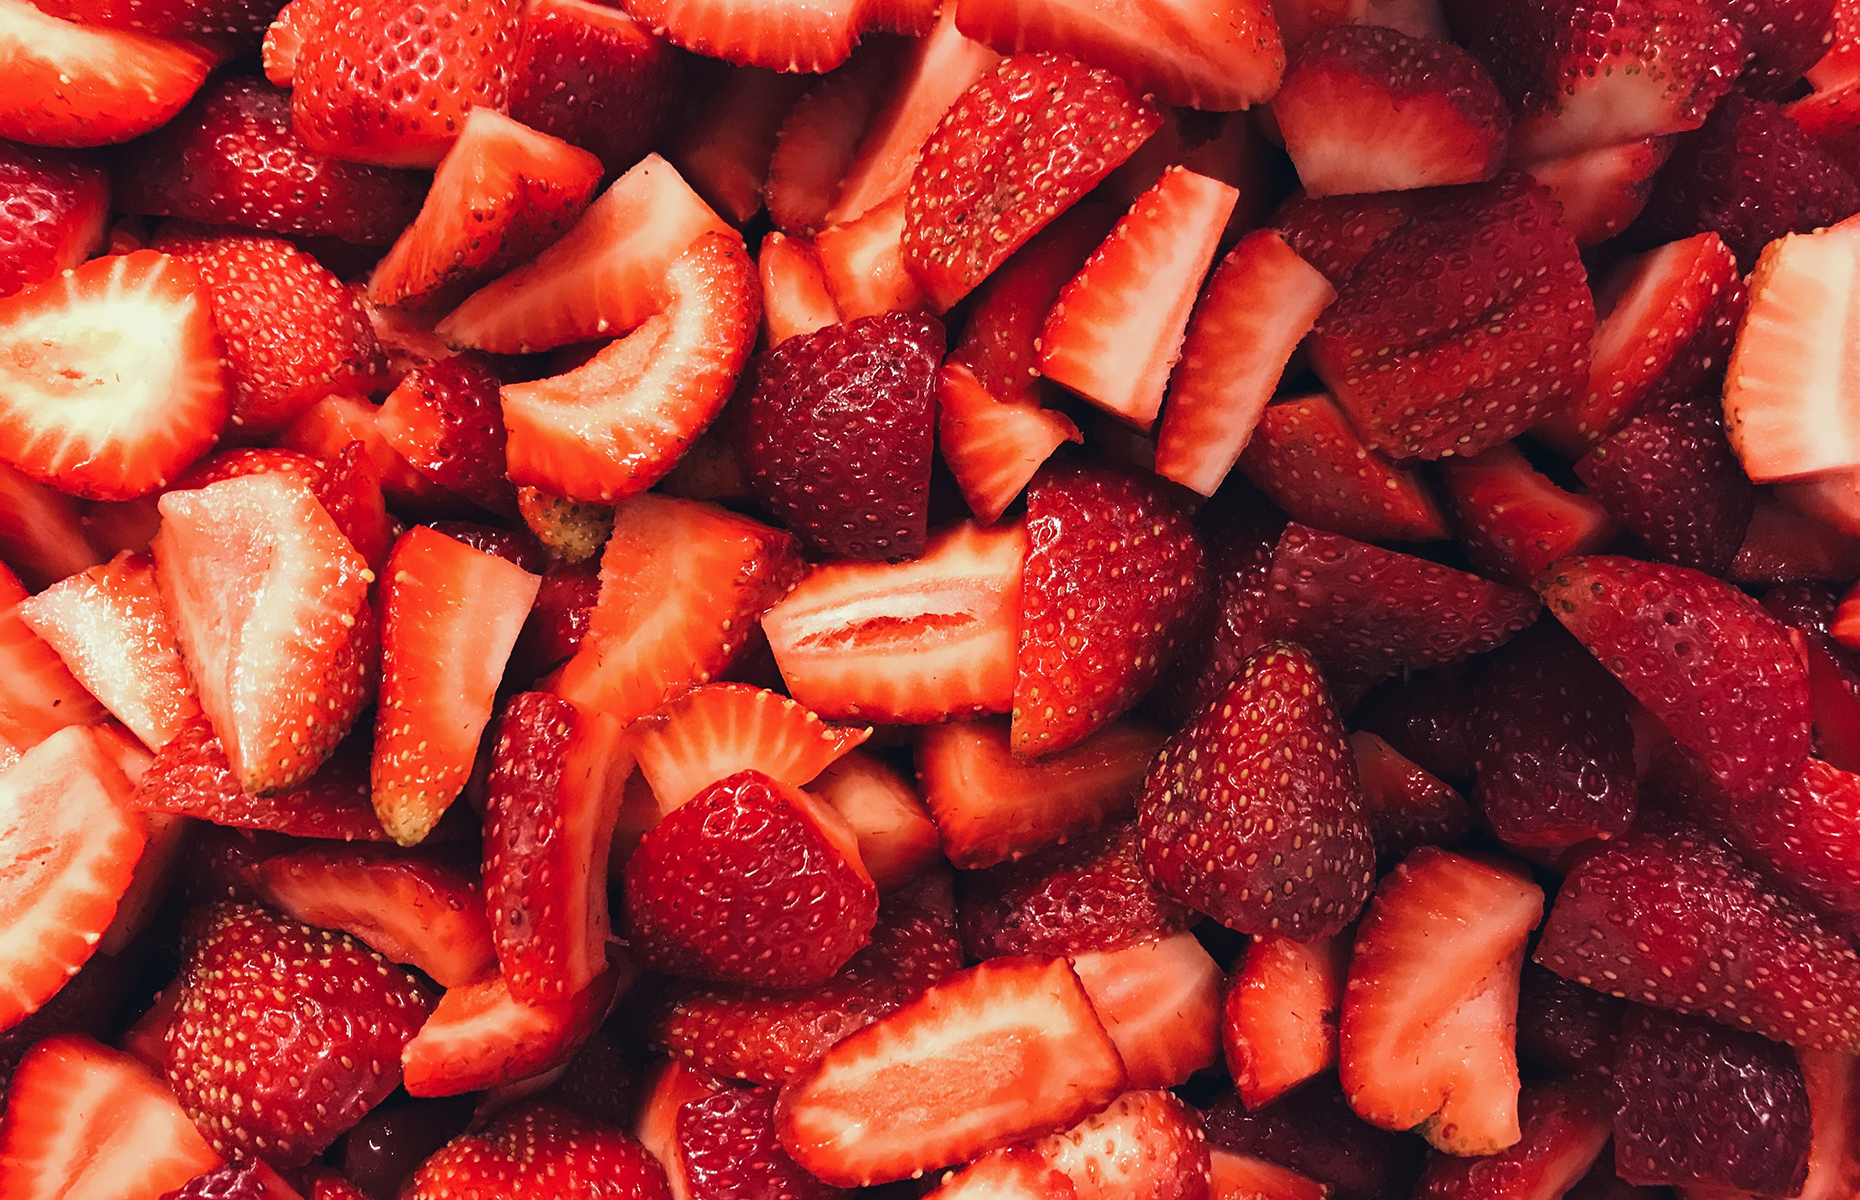 Sliced strawberries (Image: Merve Aydın/Unsplash)